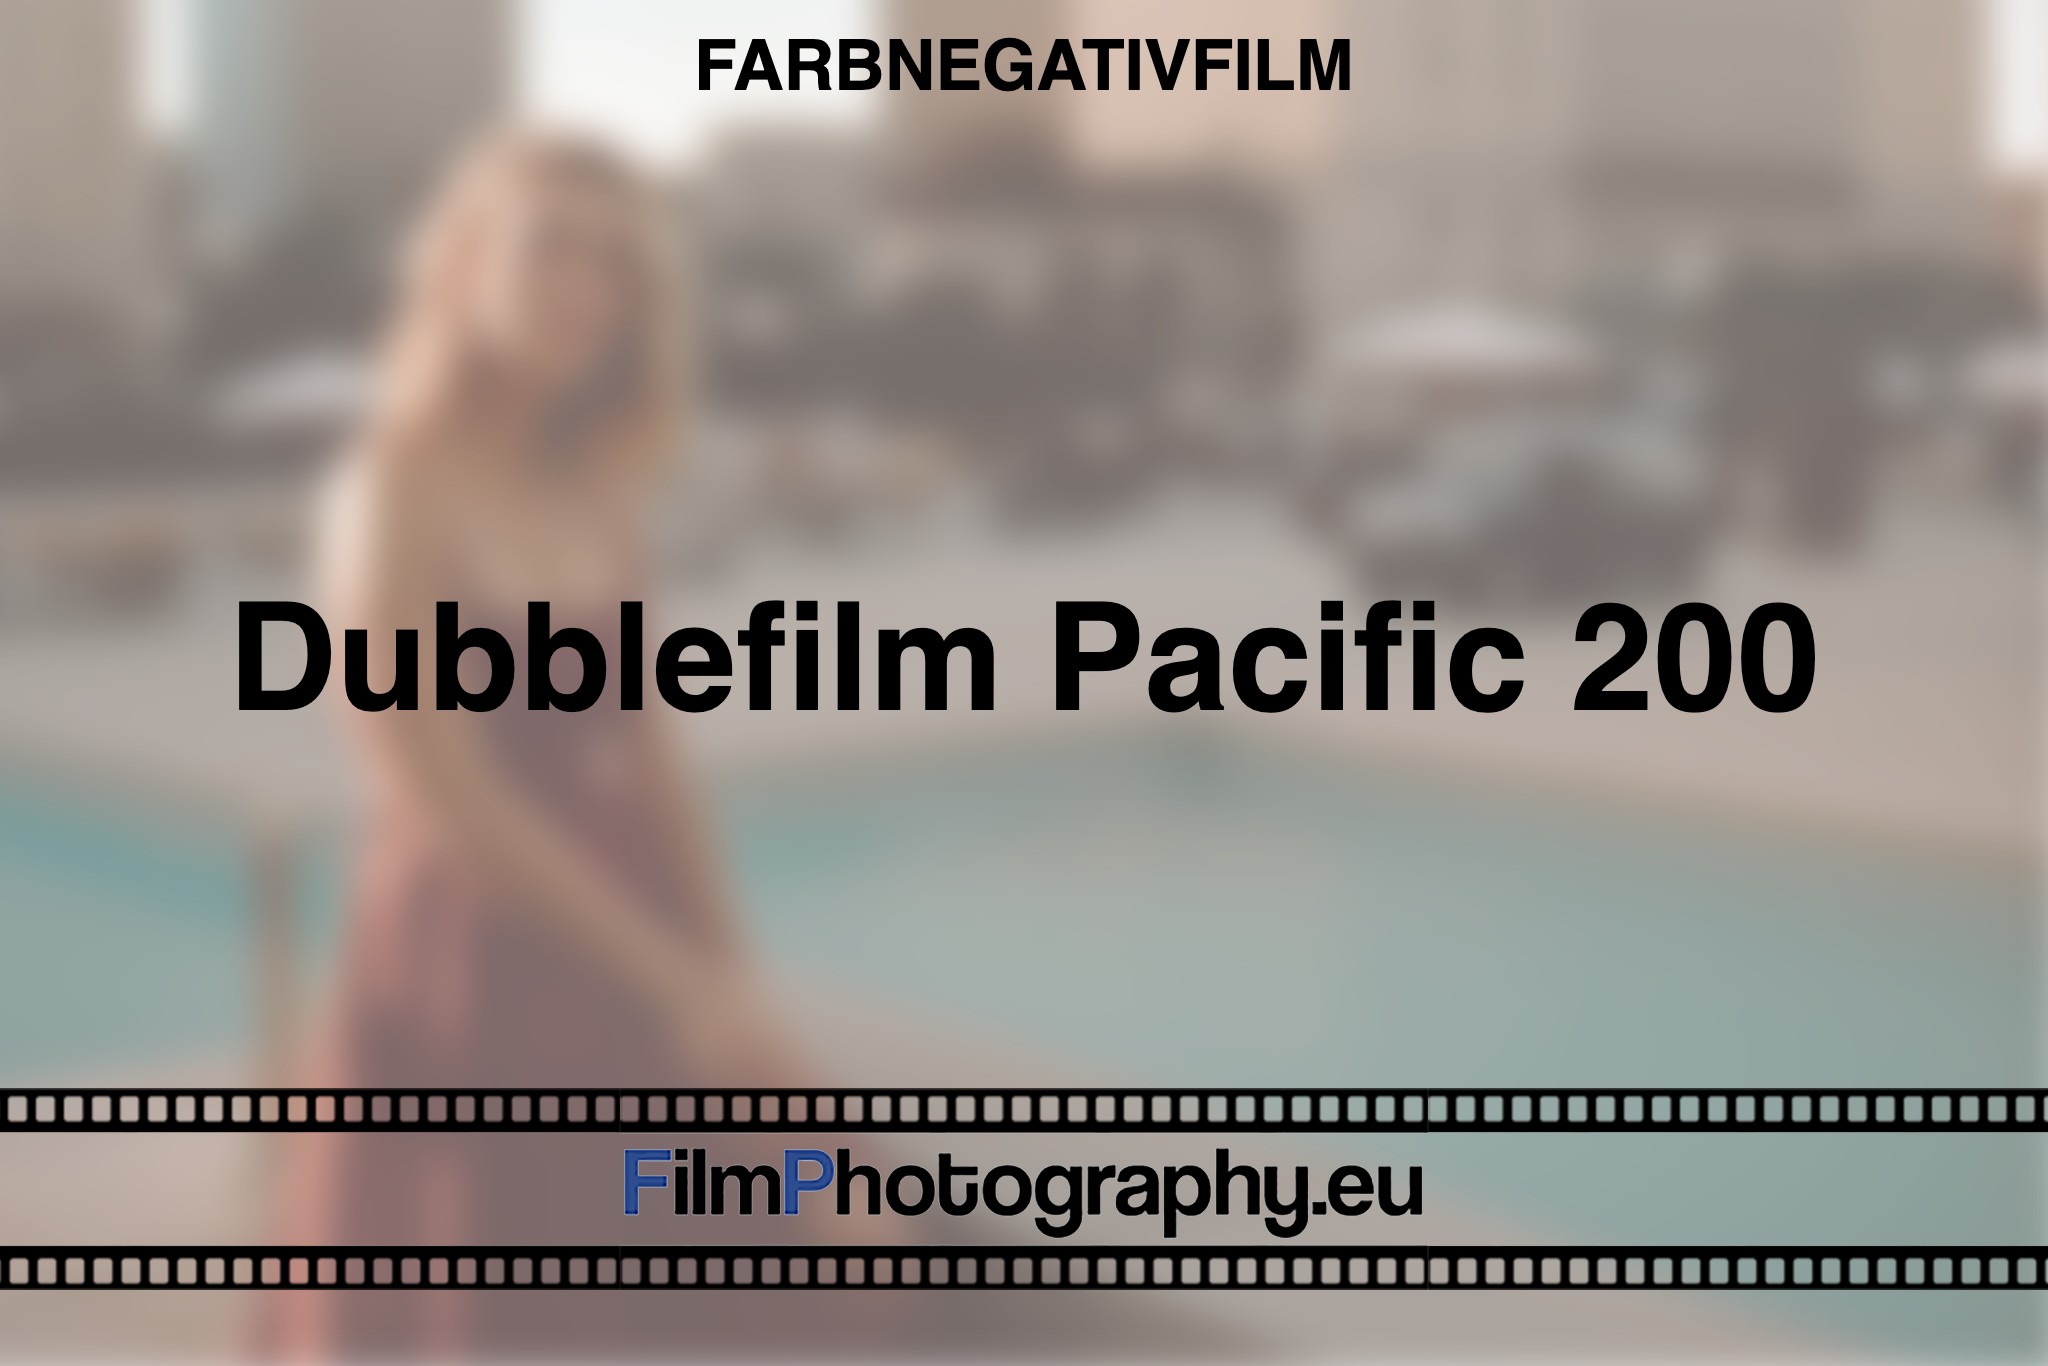 dubblefilm-pacific-200-farbnegativfilm-bnv